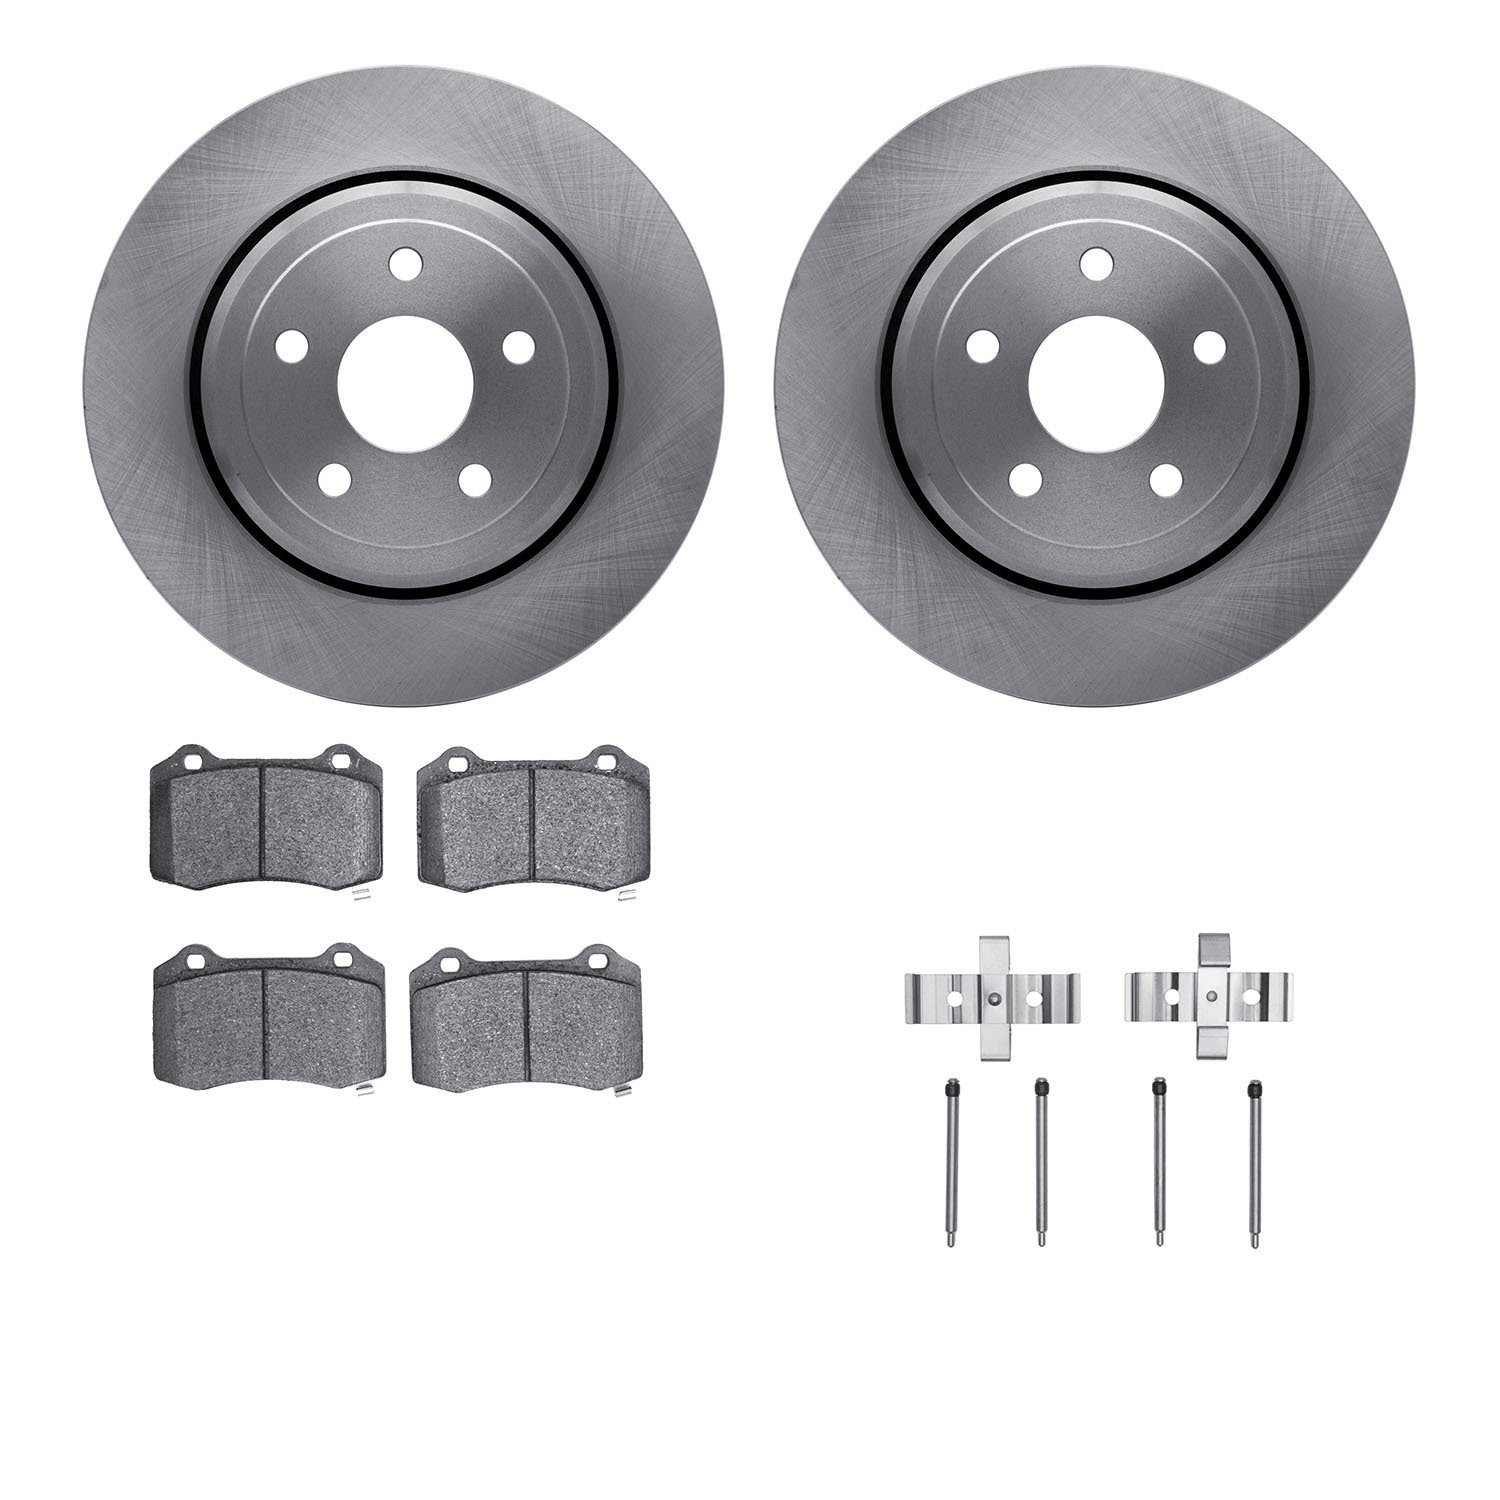 6412-42028 Brake Rotors with Ultimate-Duty Brake Pads Kit & Hardware, Fits Select Mopar, Position: Rear